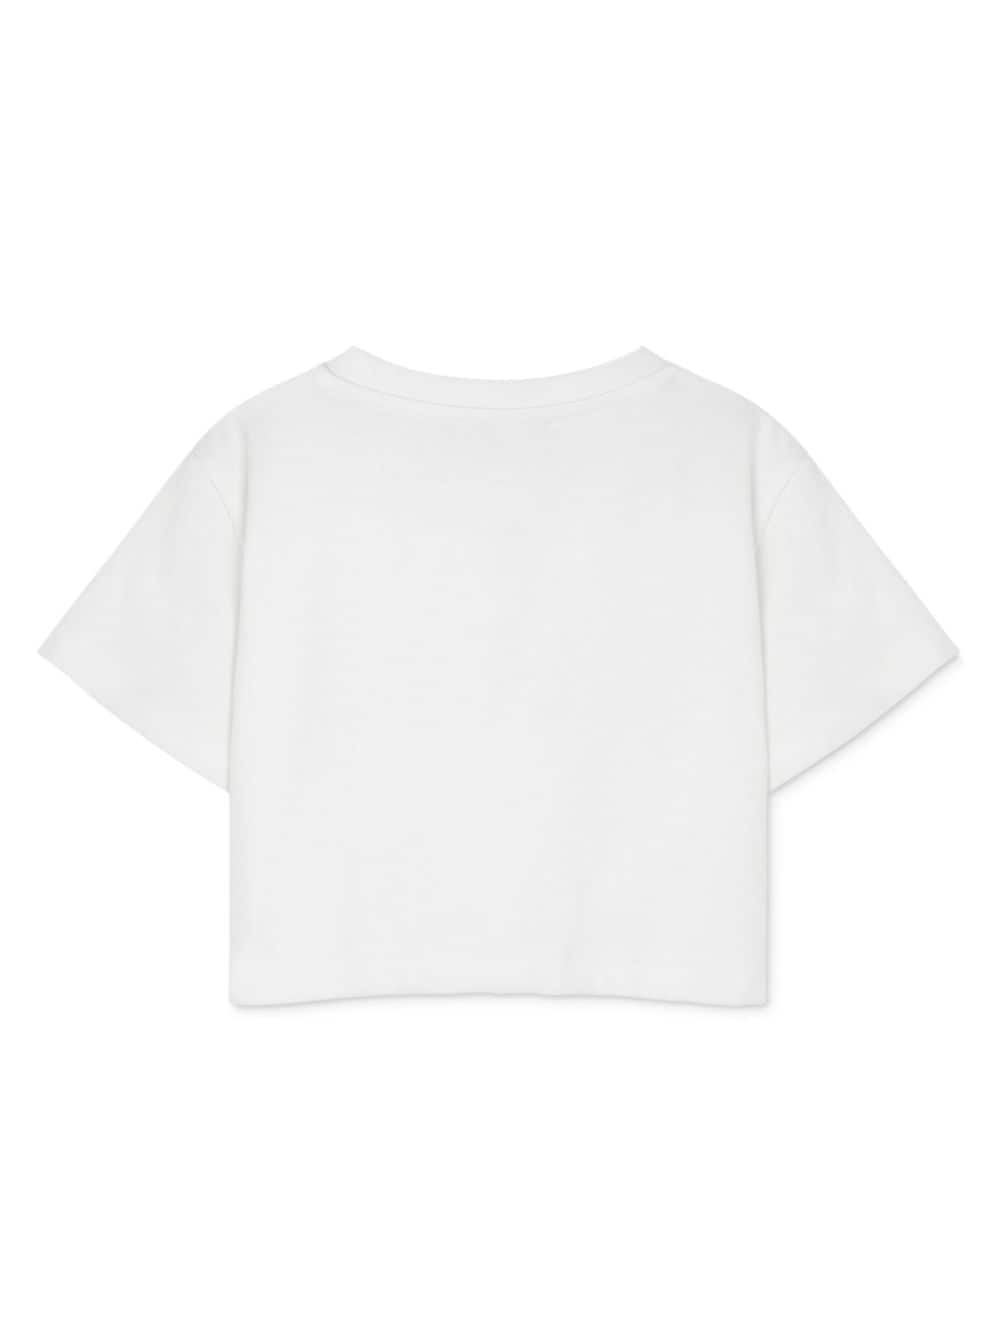 White cotton crop t-shirt for girls